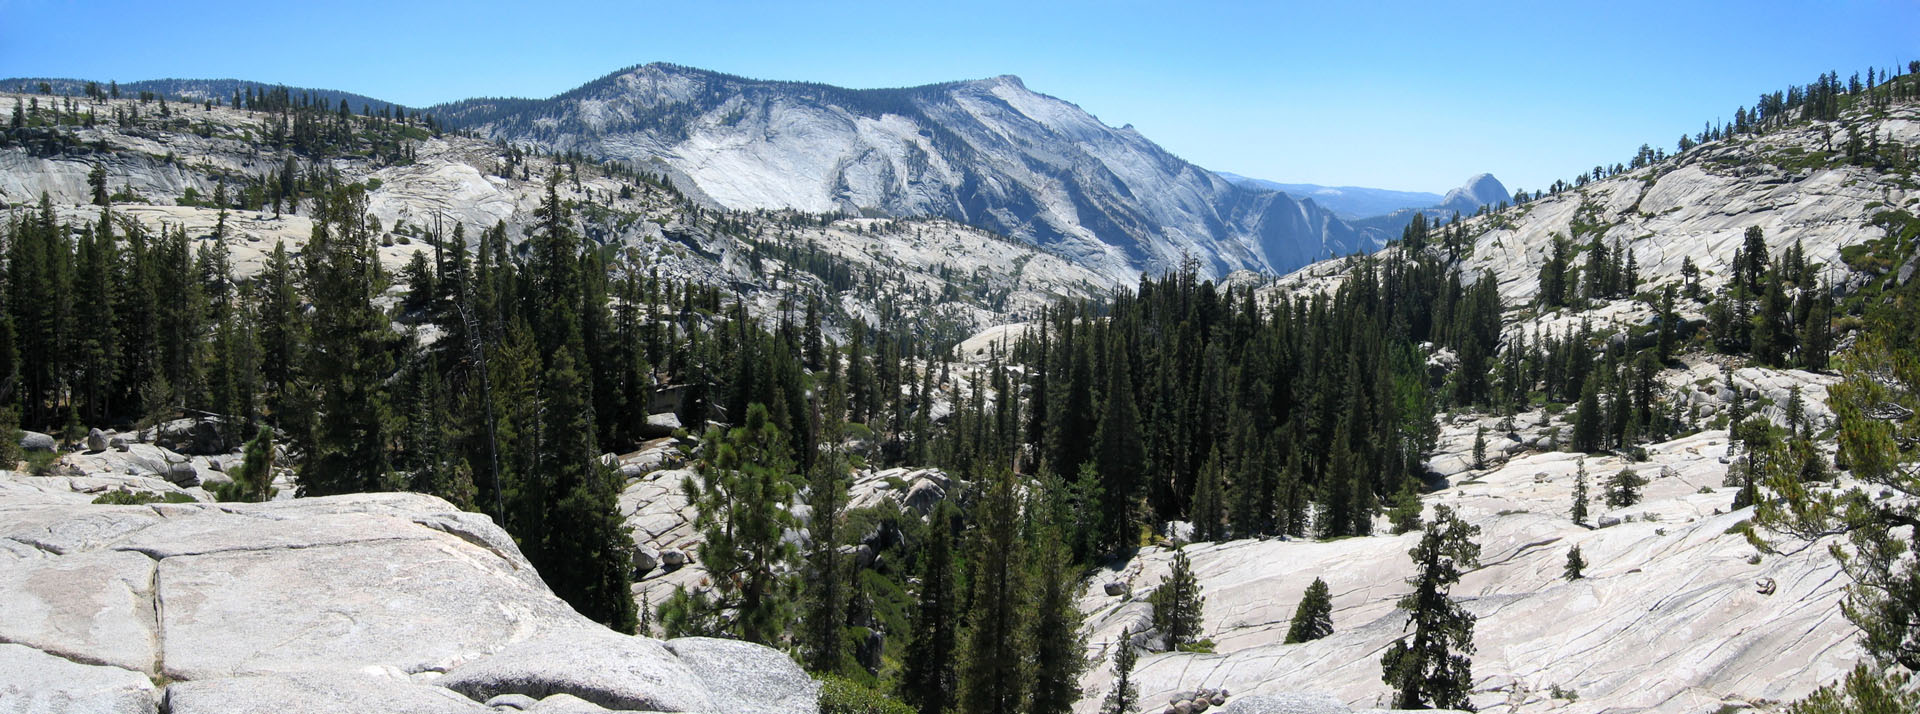 Yosemite-National-Park_Panorama_02